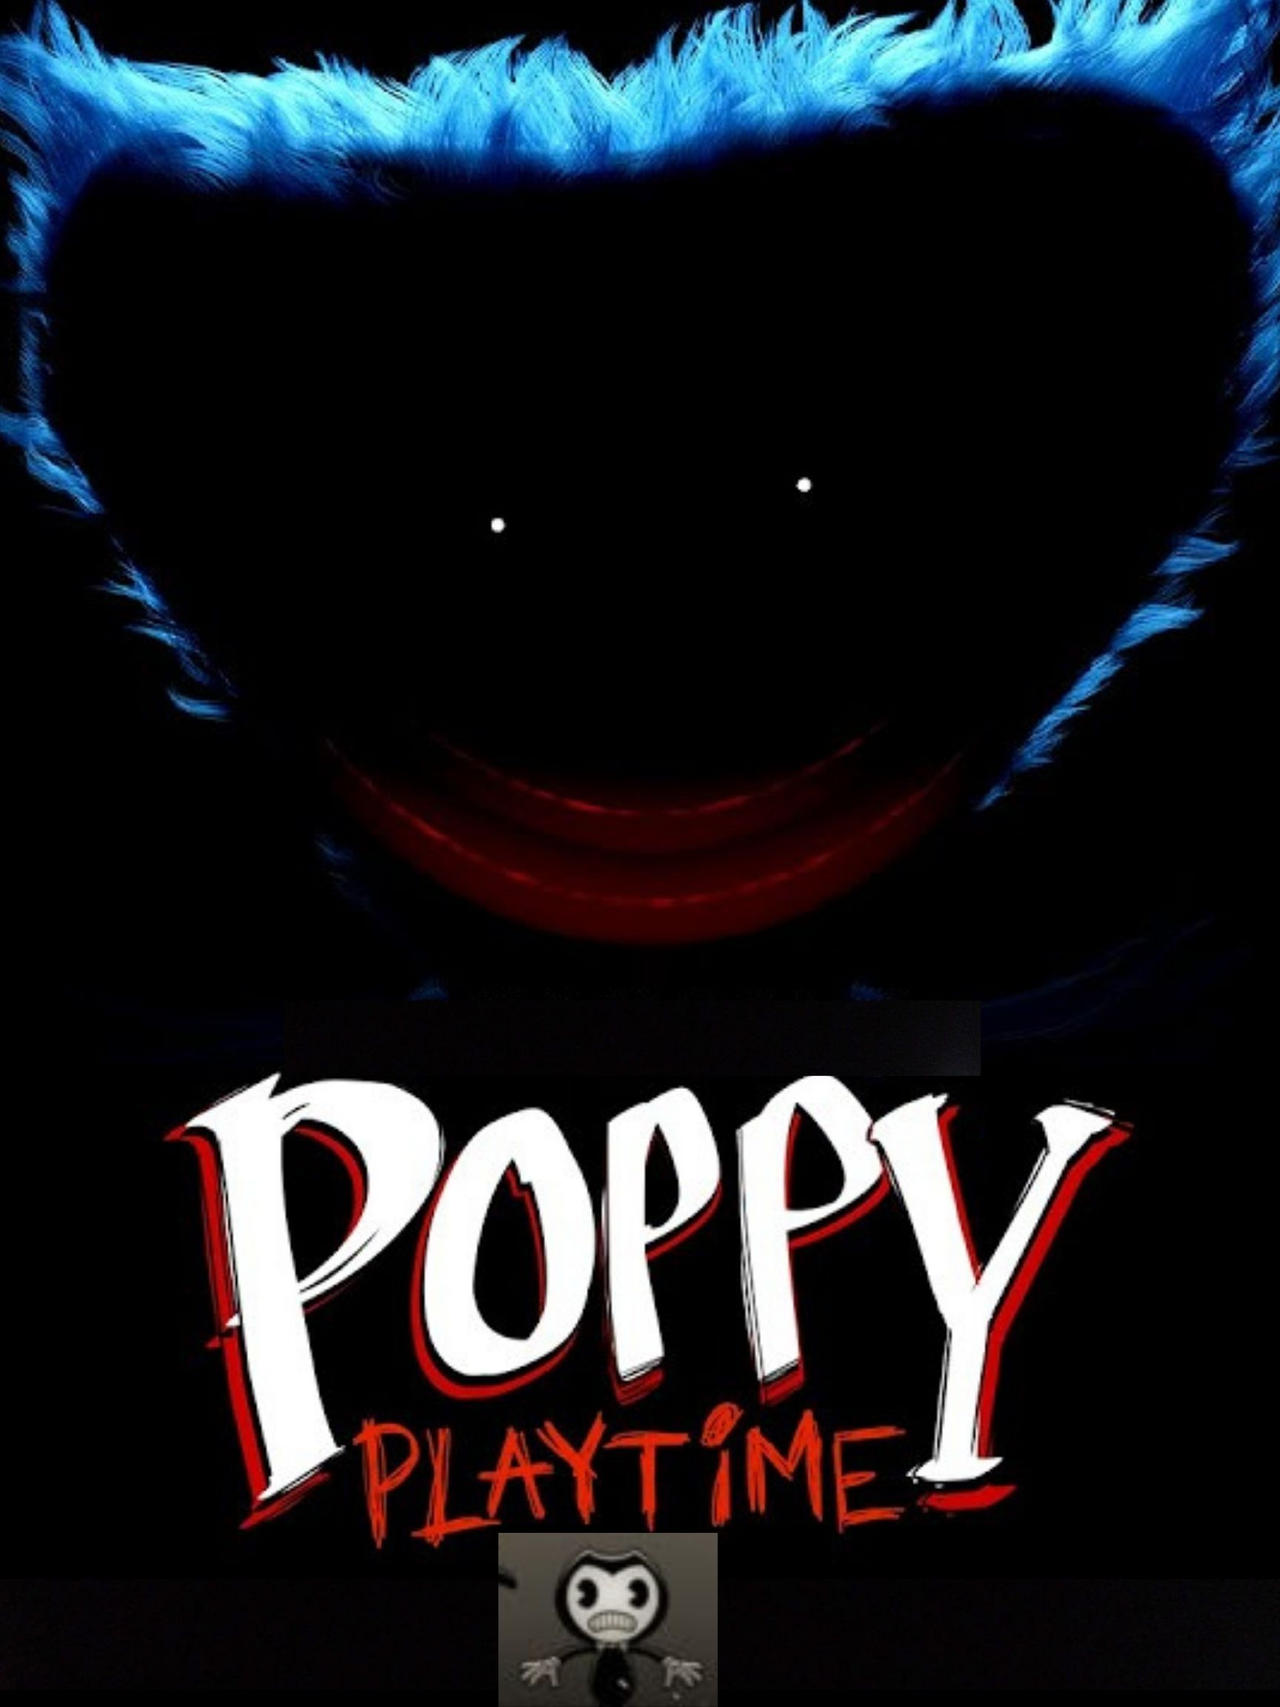 Poppy Playtime Images - Mommy long legs 7 - Wattpad